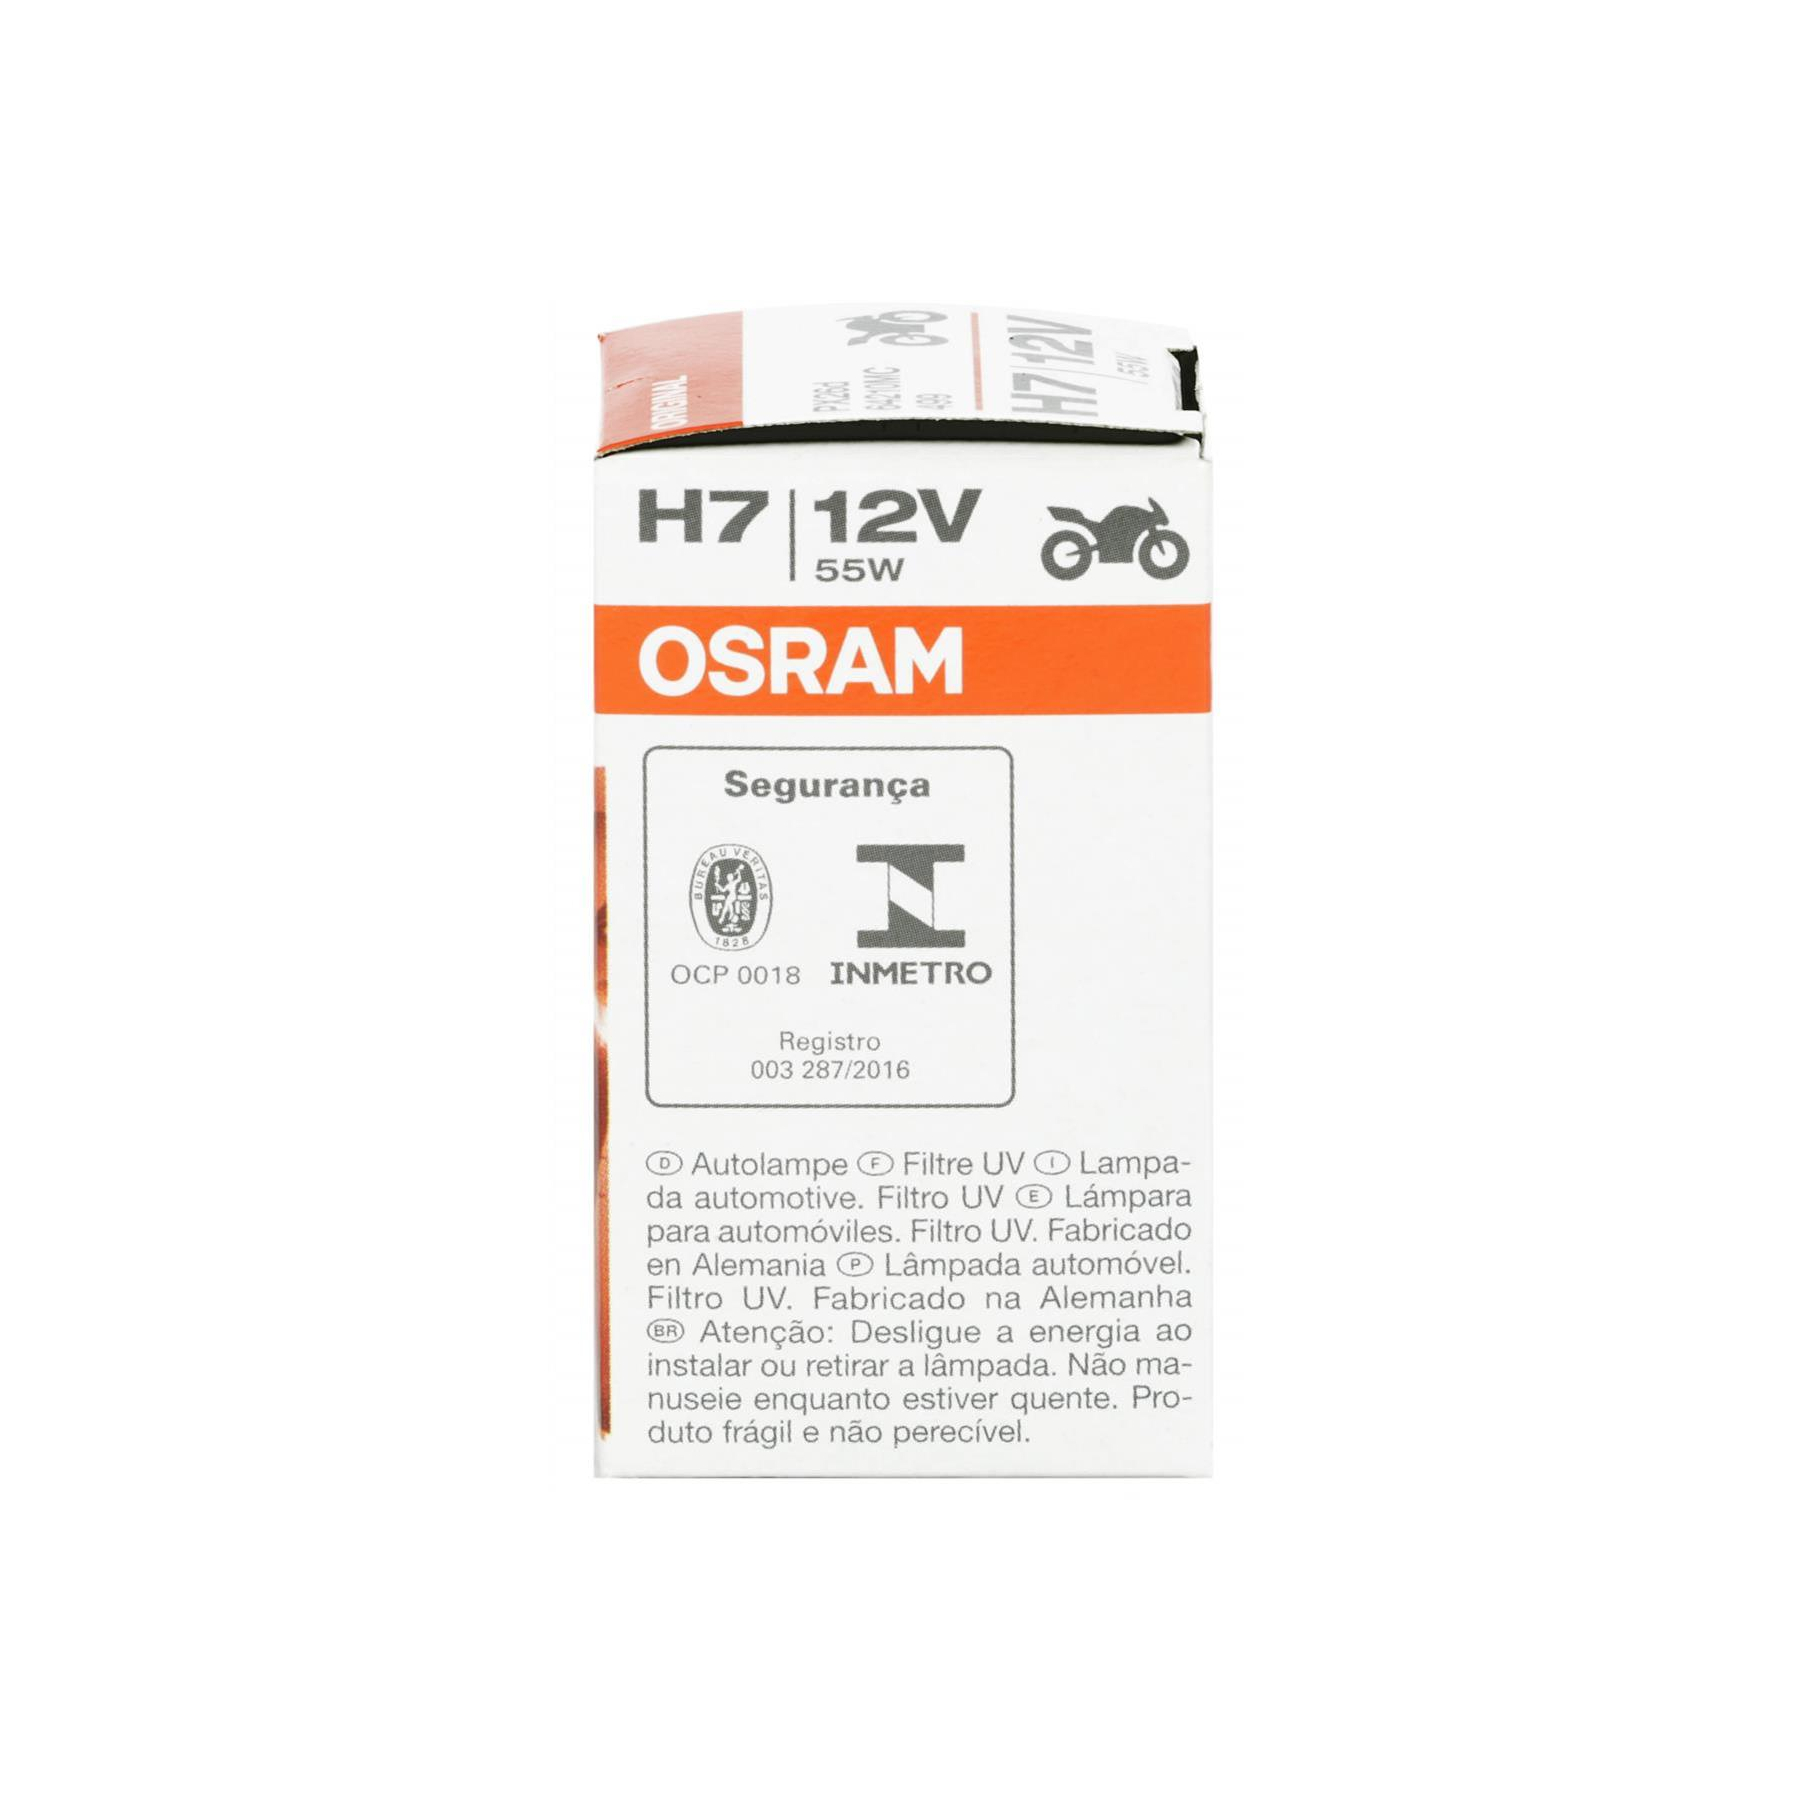 OSRAM Lampe Halogenlampe H4 ORIGINAL LINE 12V 60/55W (1 Stück